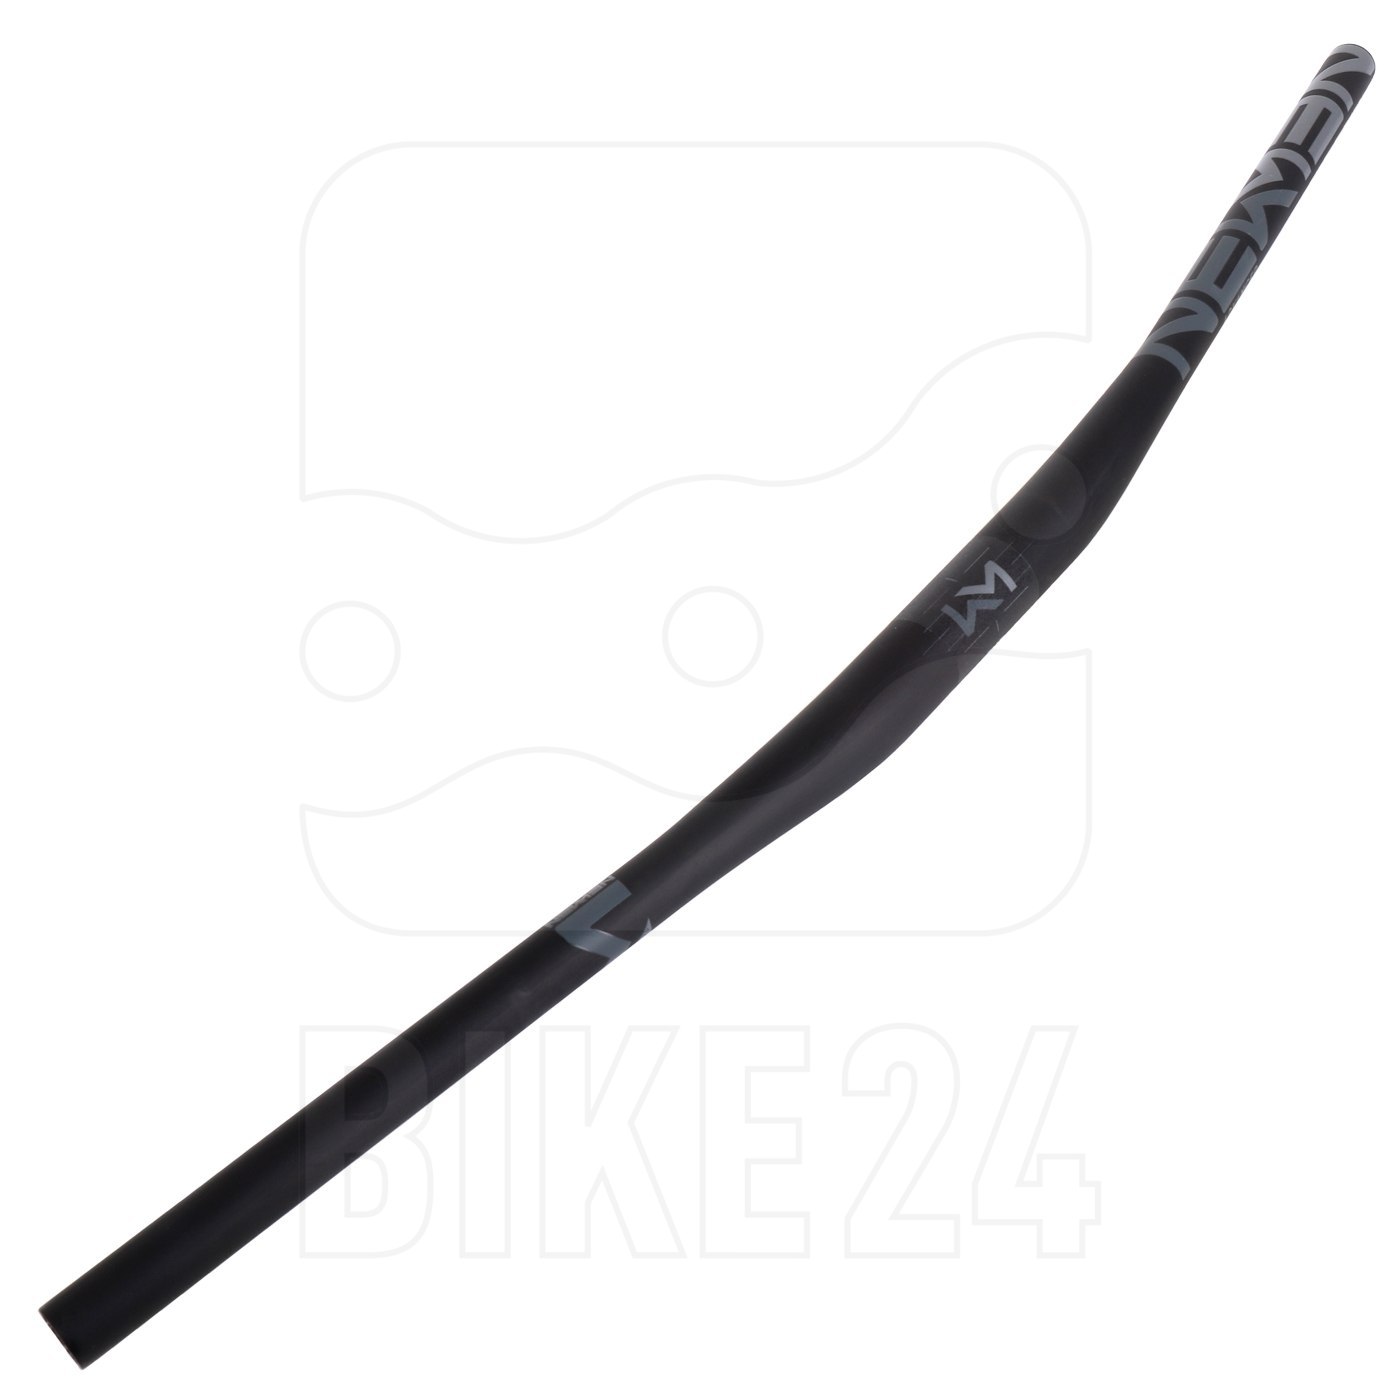 Productfoto van Newmen Advanced Carbon Handlebar - 318.10 - 760mm - Flatbar - black